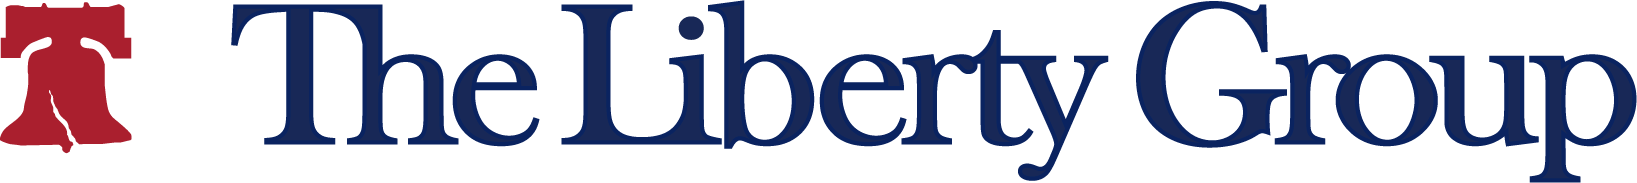 the liberty group logo